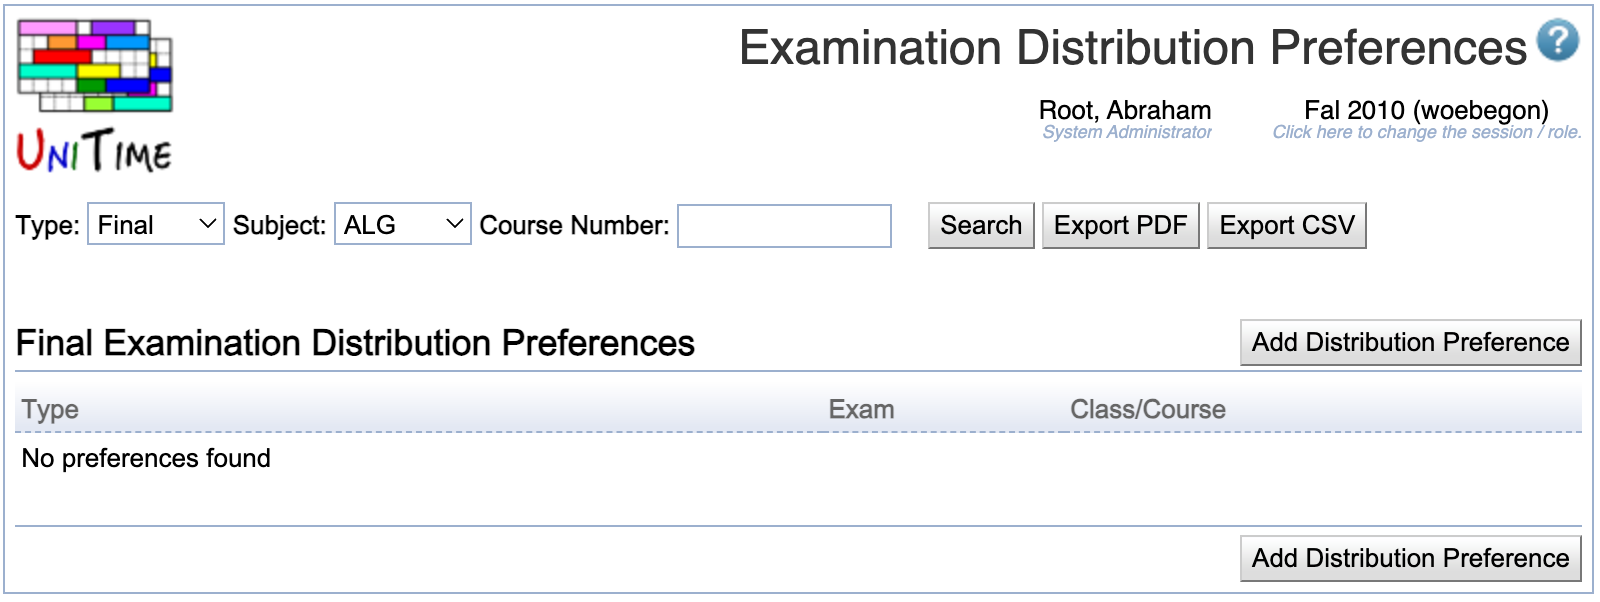 Examination Distribution Preferences